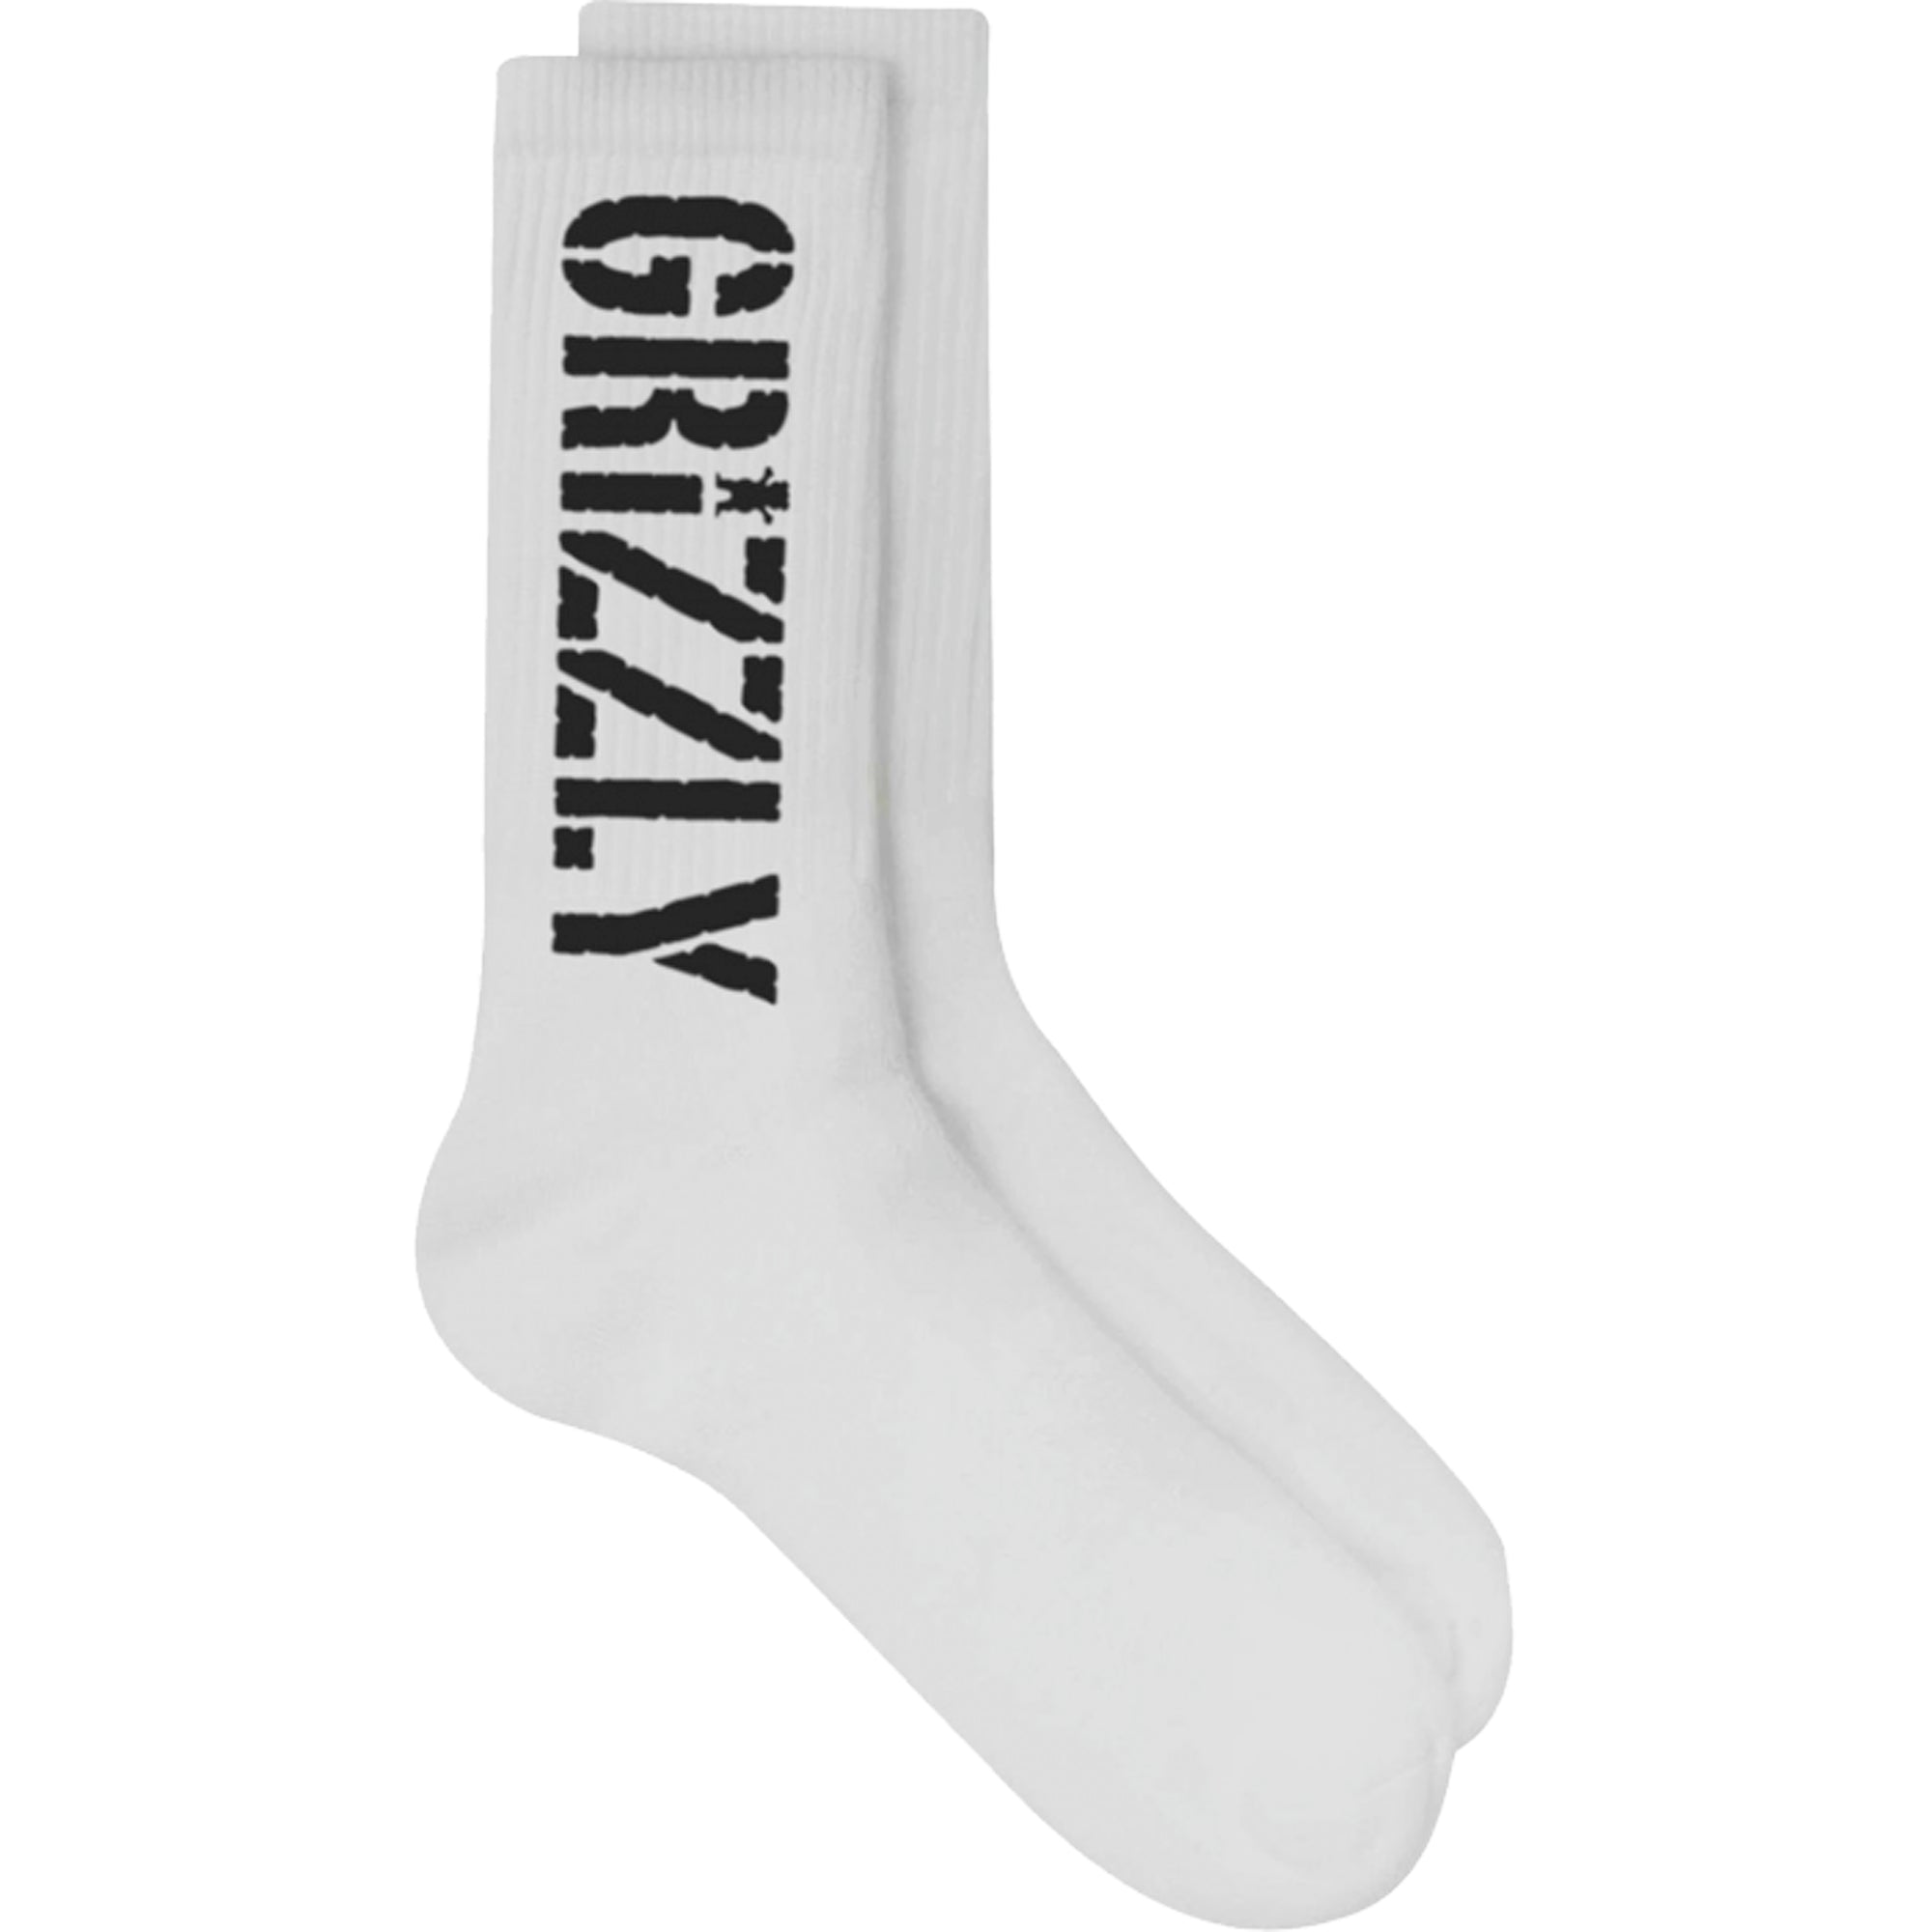 Grizzly Stamp Crew Socks - White/Black